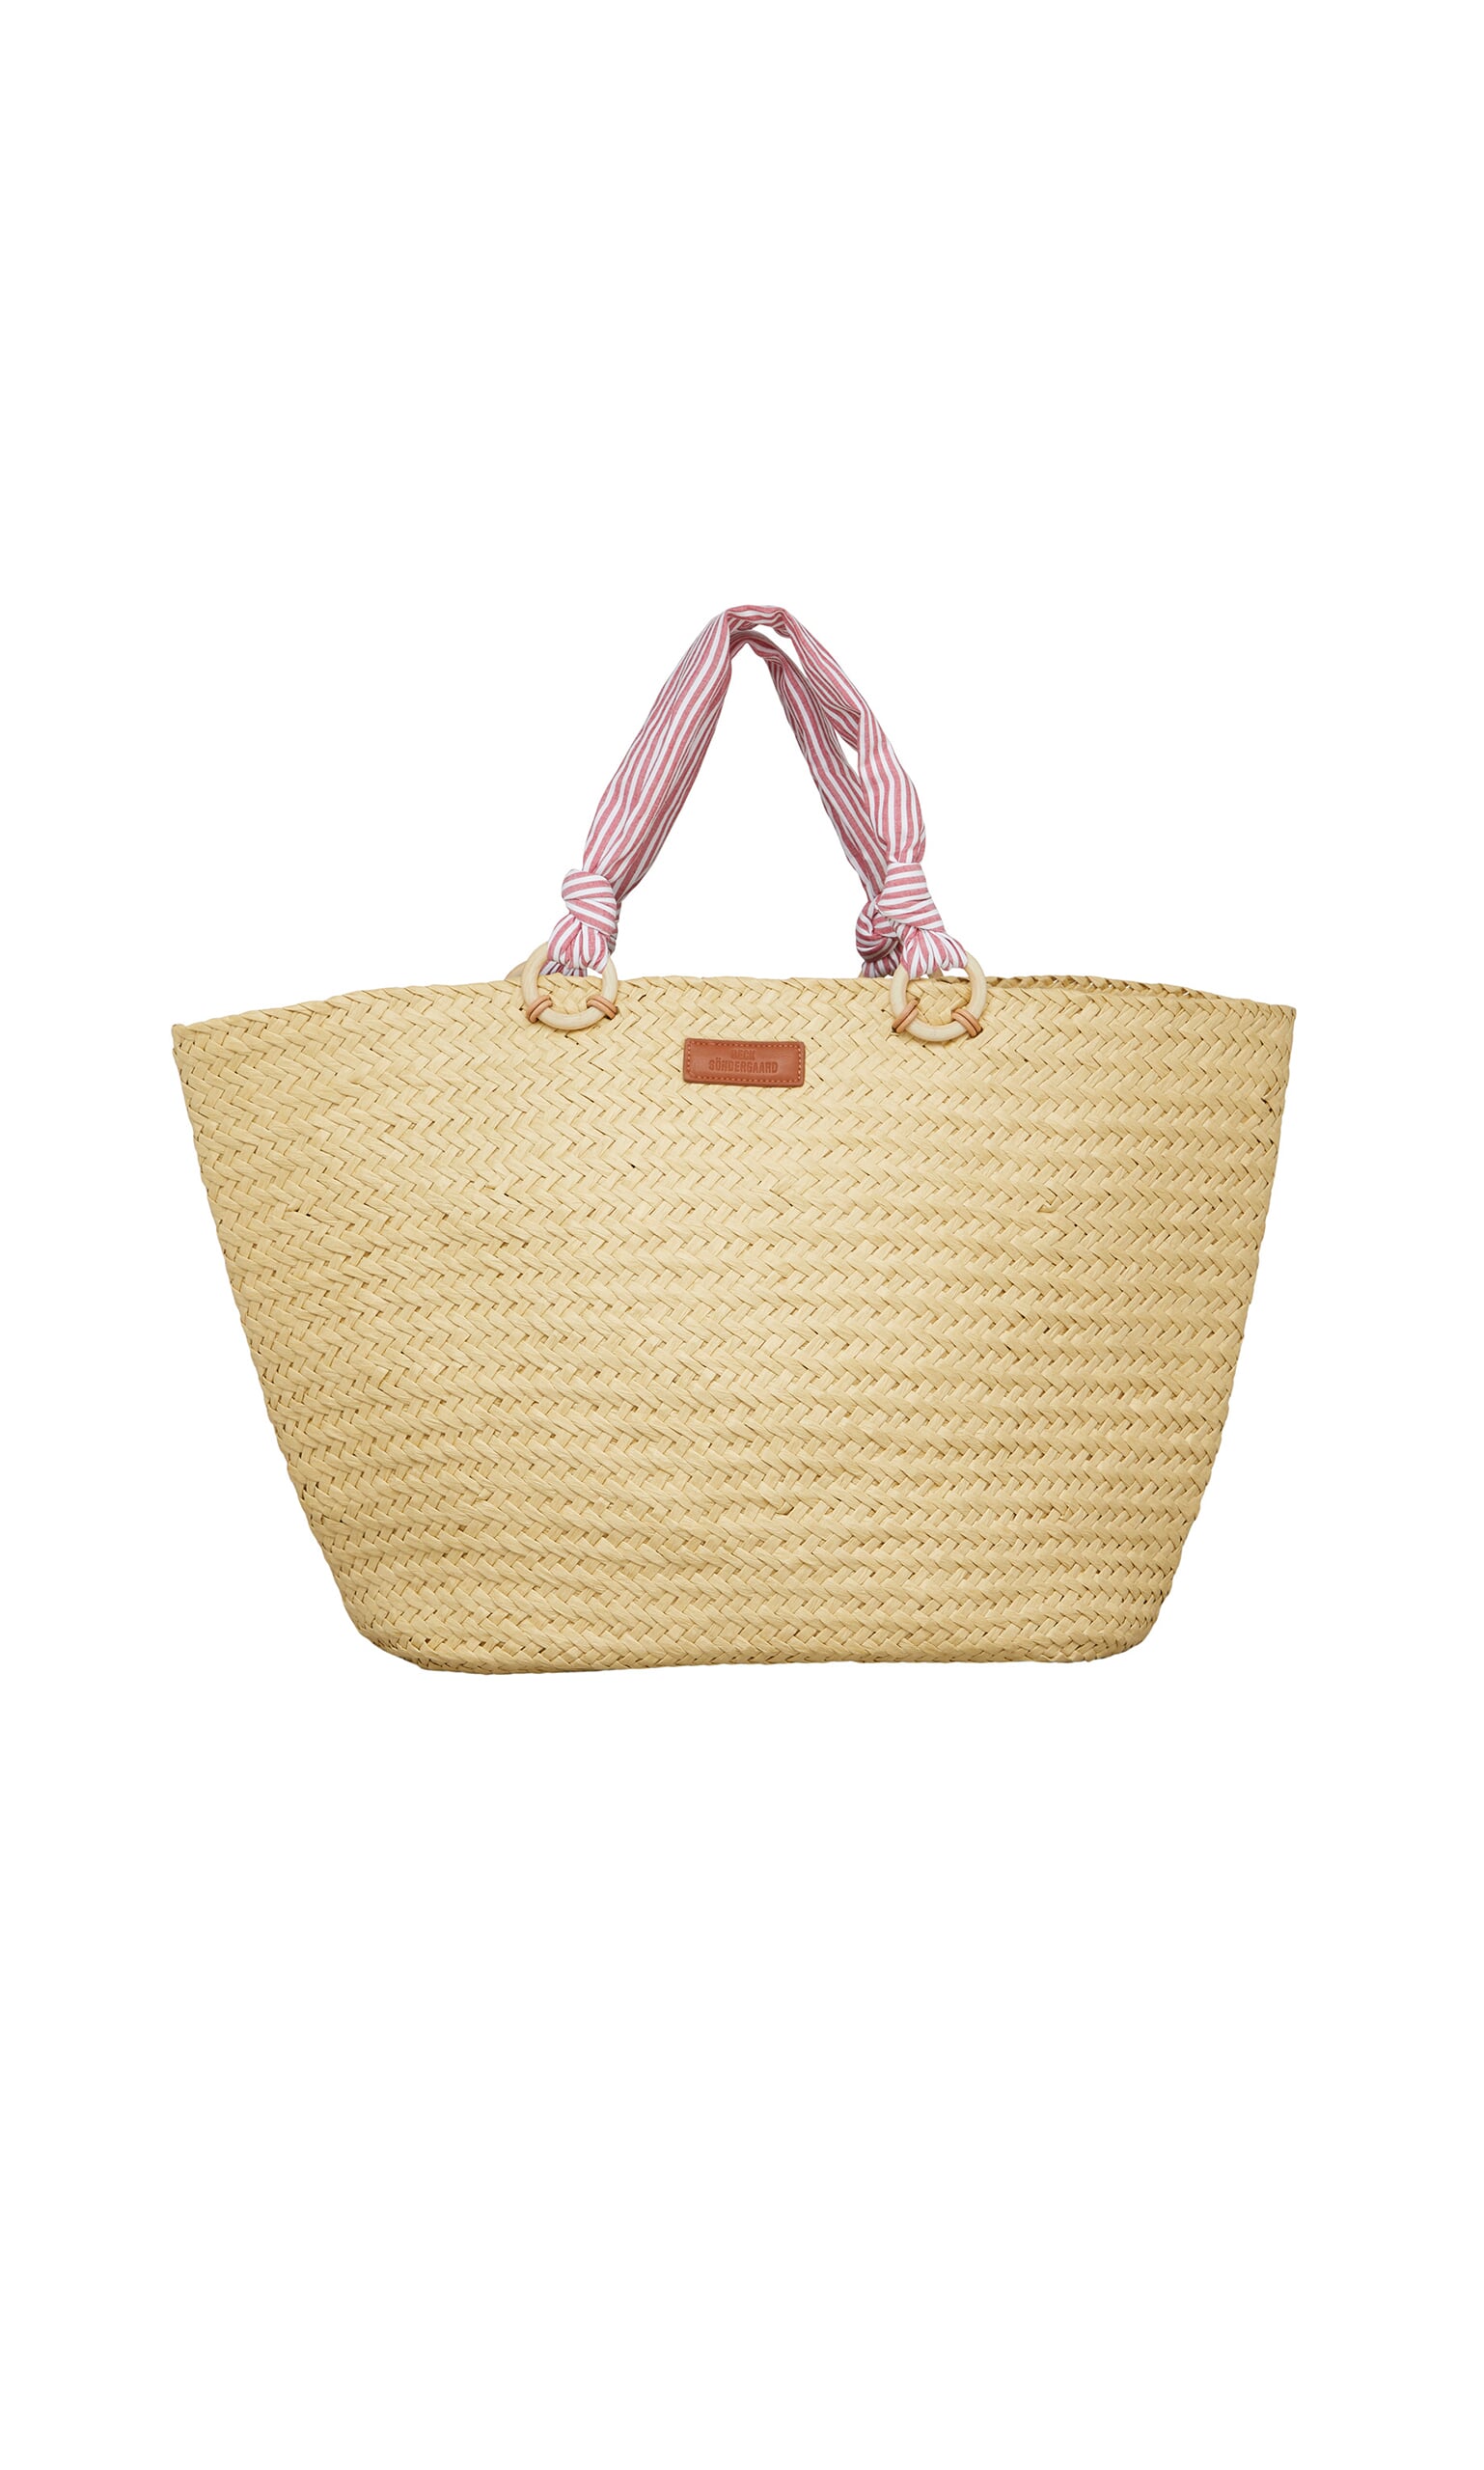 Coral shopper bag - Plümo Ltd